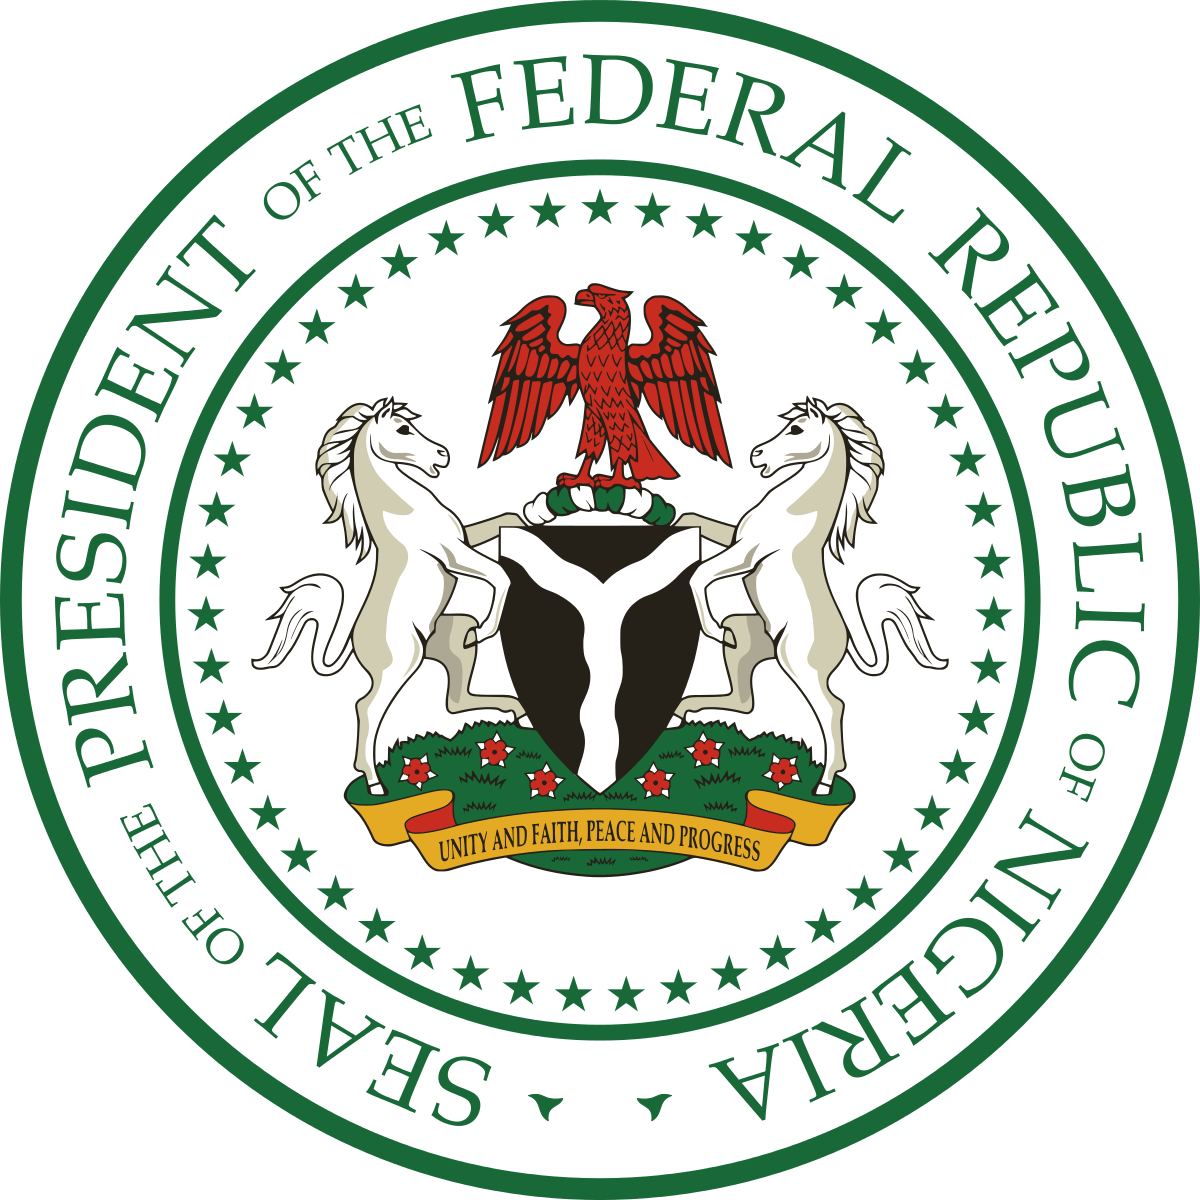 Happy Easter Message from President Federal Republic of Nigeria, Muhammadu Buhari